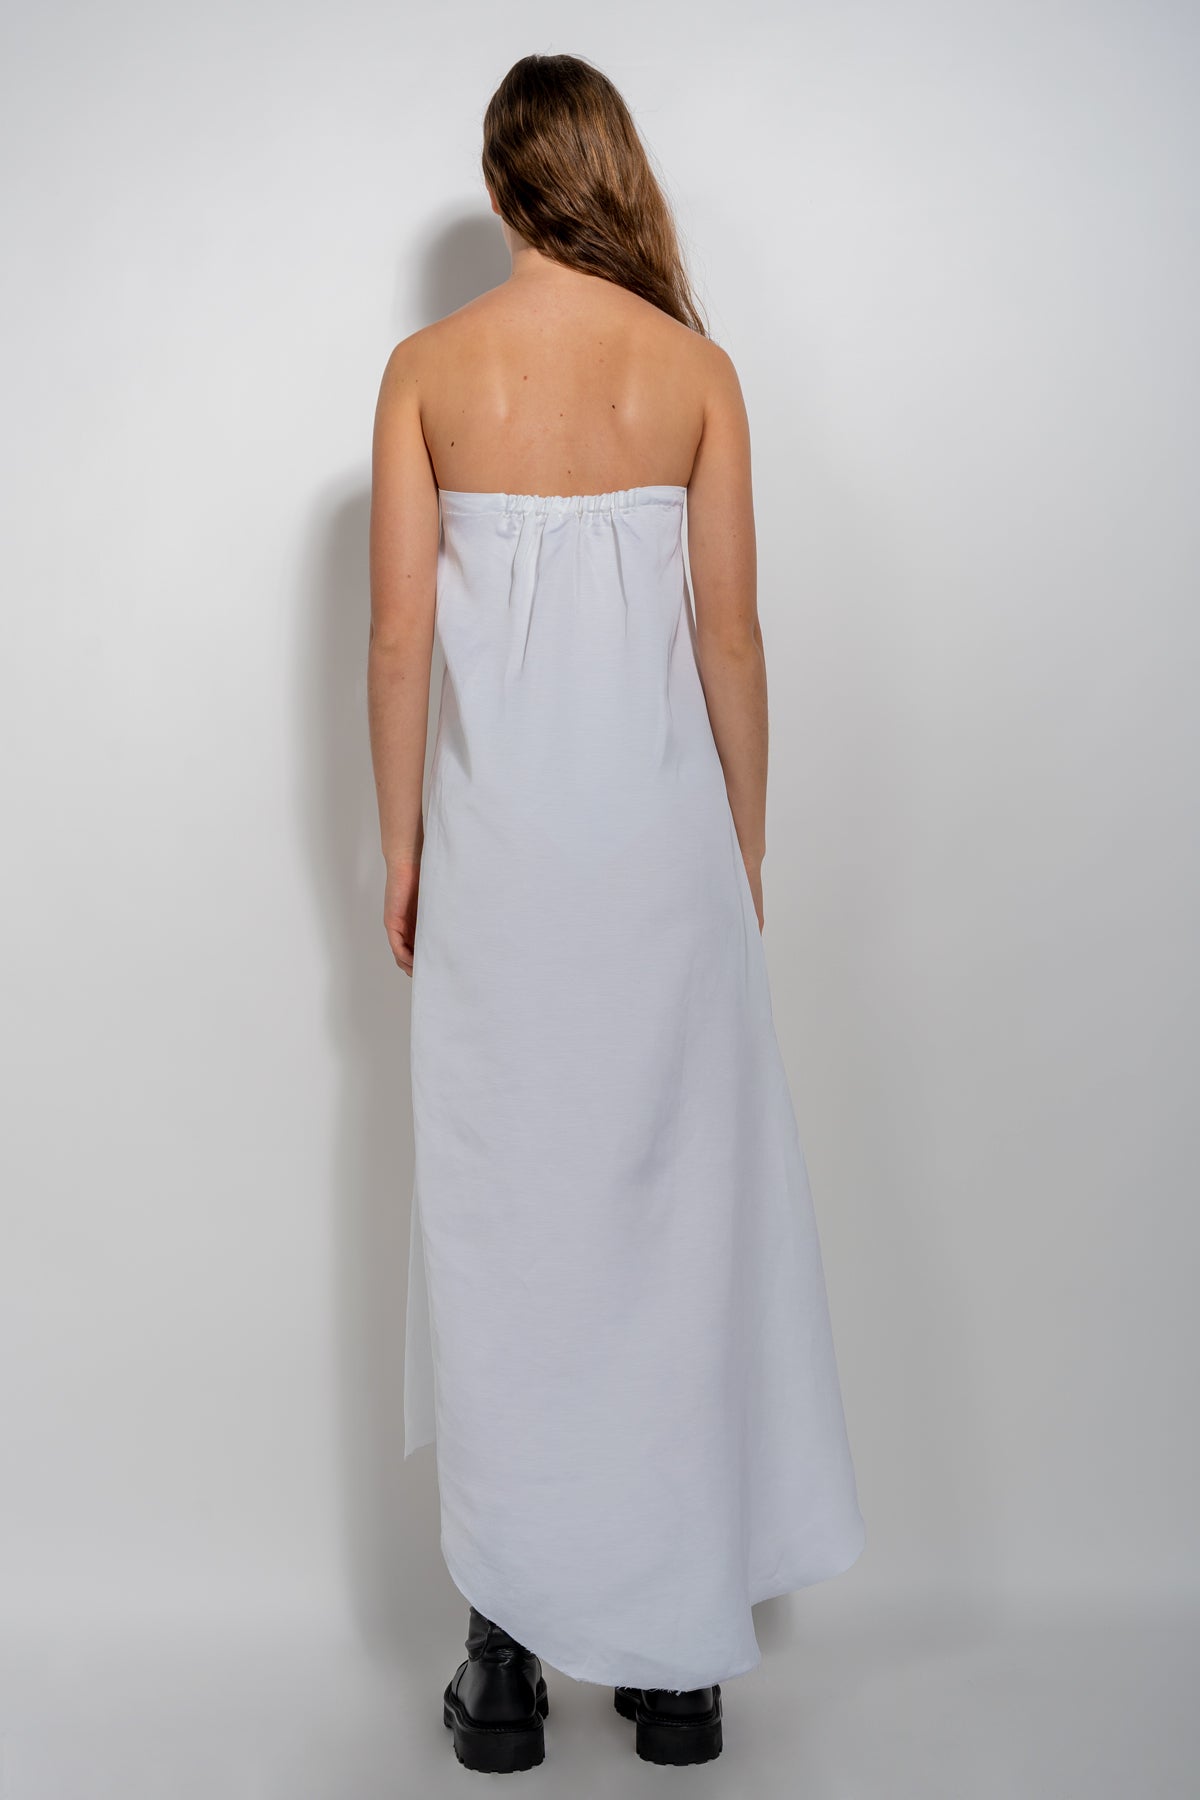 WHITE OFF SHOULDER LONG DRESS marques almeida